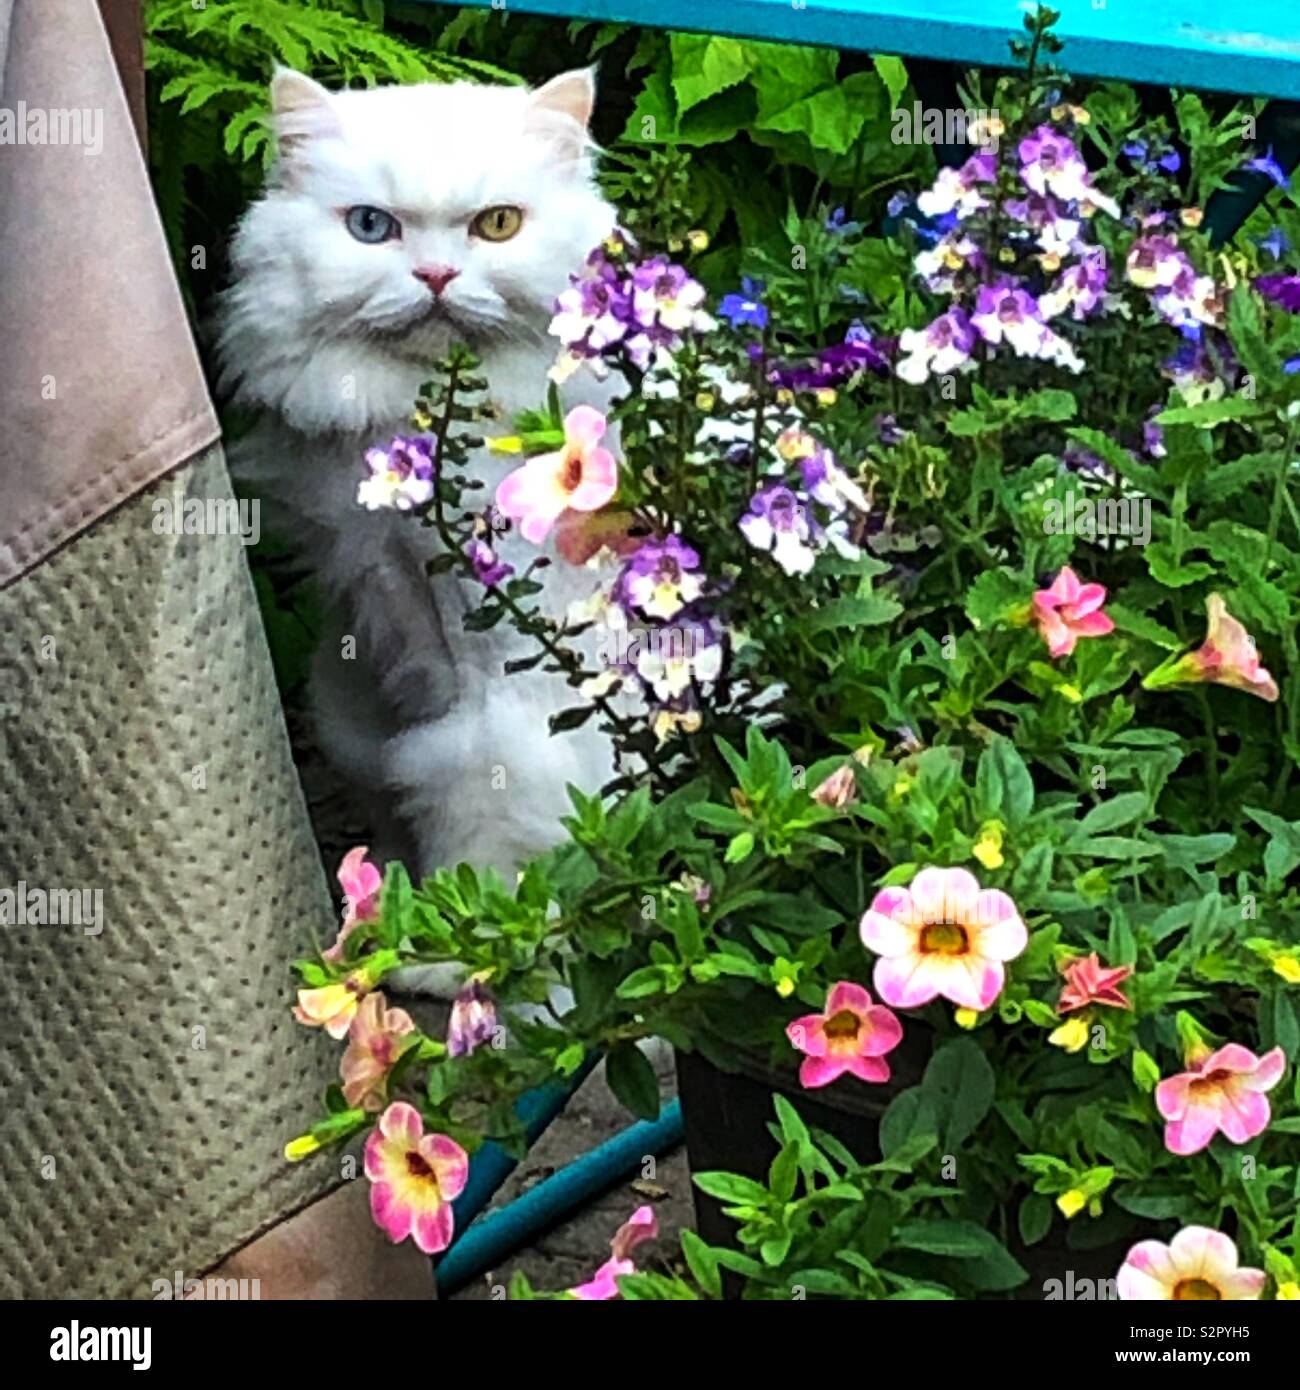 My cat, Ms. Zsa Zsa Gabor, June 16, 2019, toronto Stock Photo - Alamy